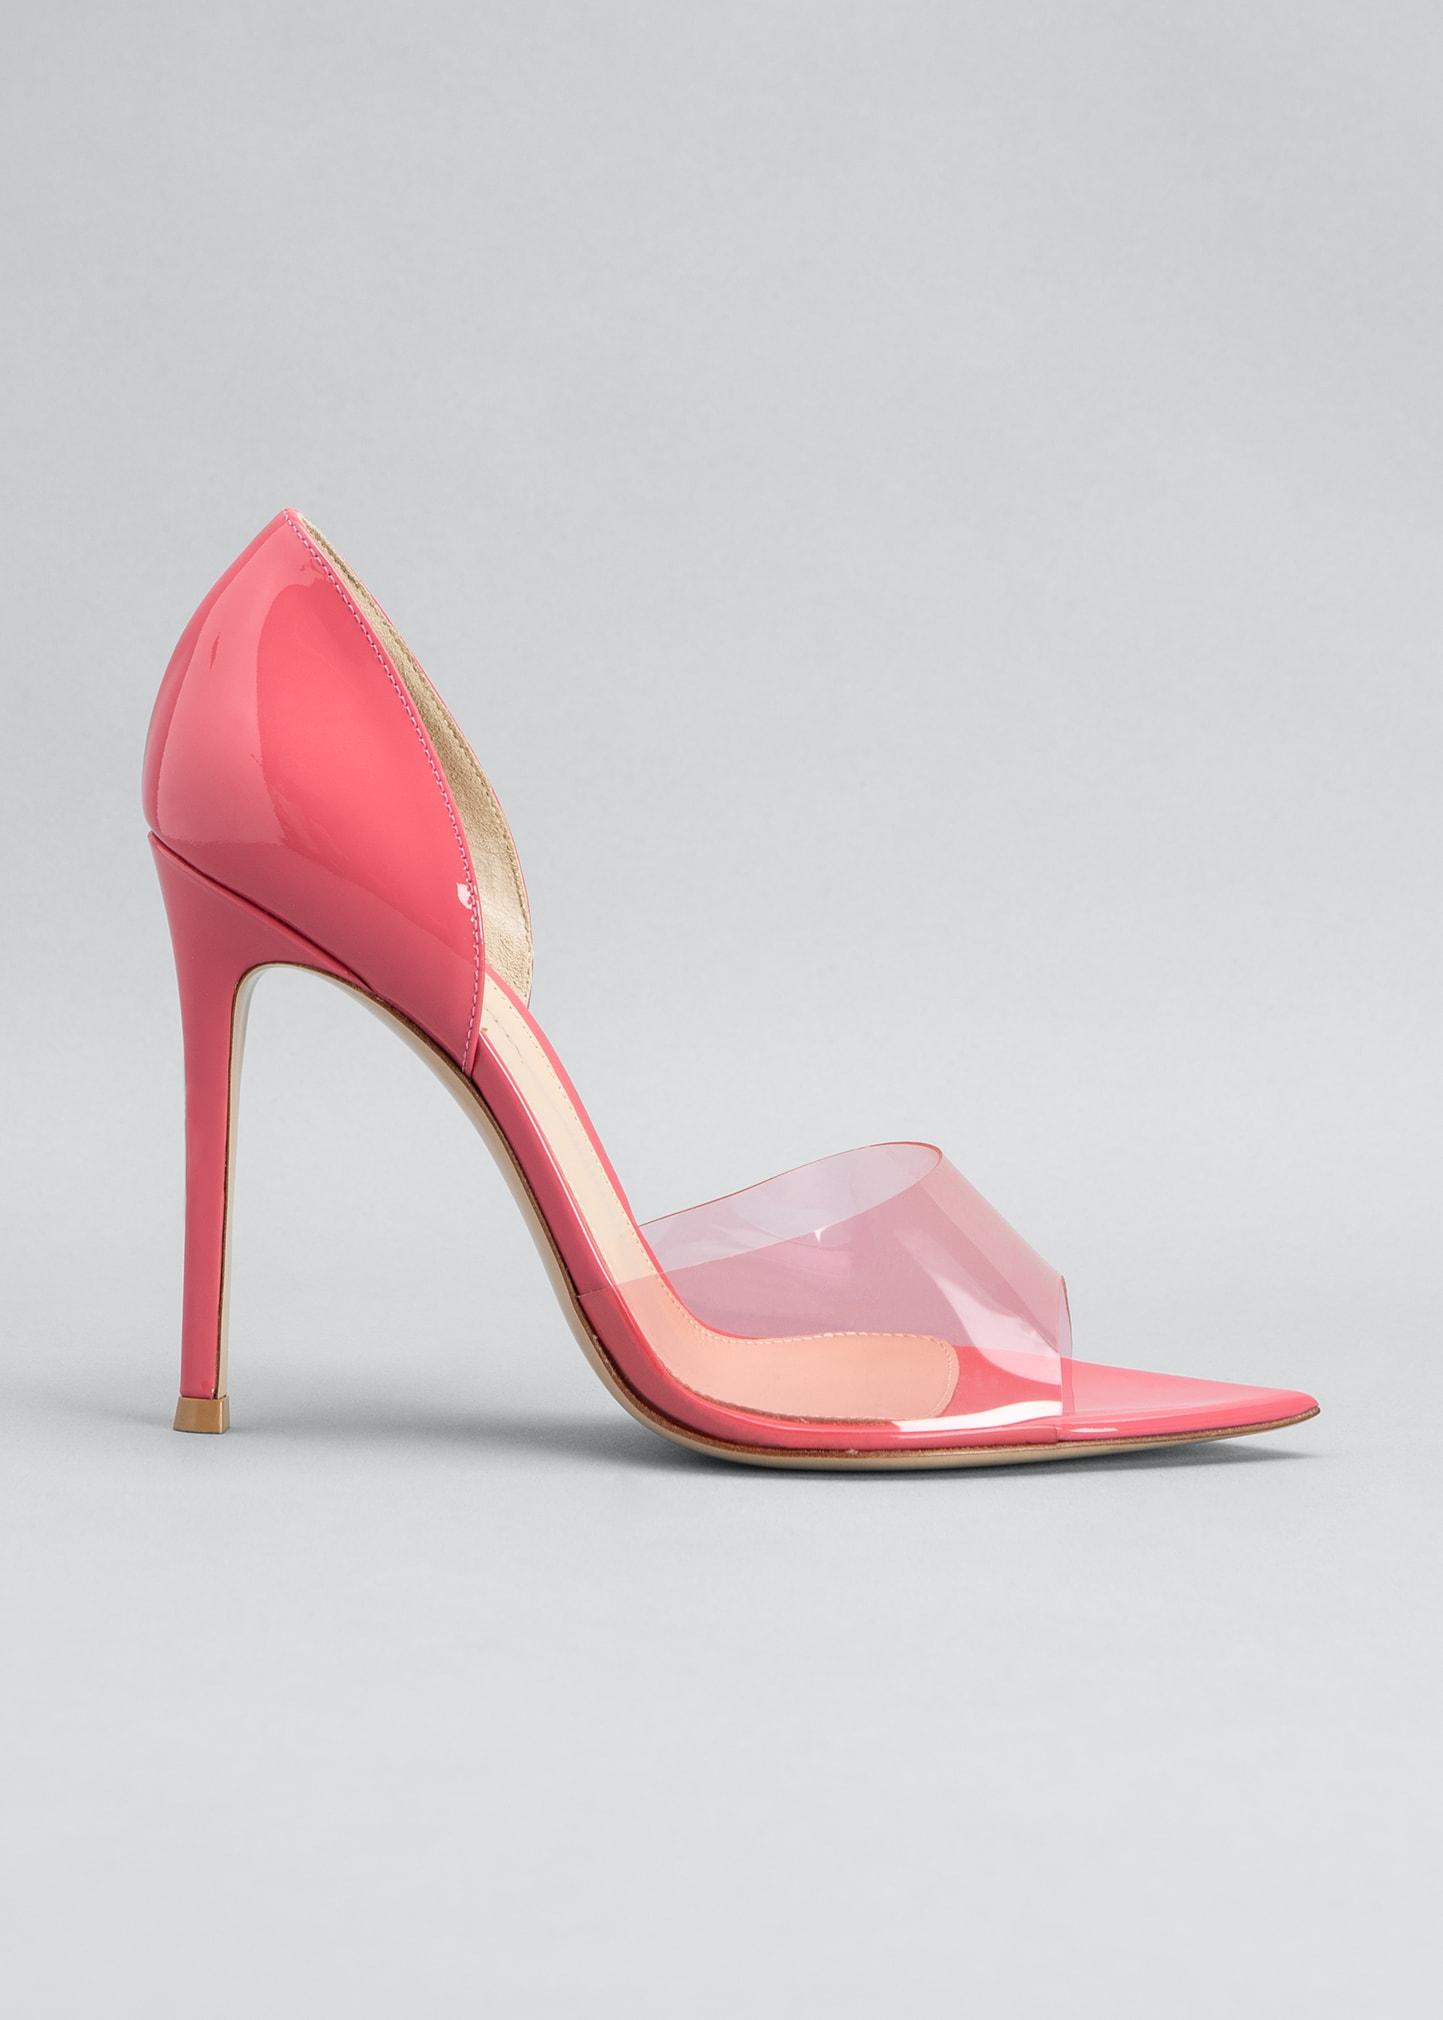 Gianvito Rossi Bree 105mm Pexi Peep-toe D'orsay High-heel Sandals in Pink |  Lyst